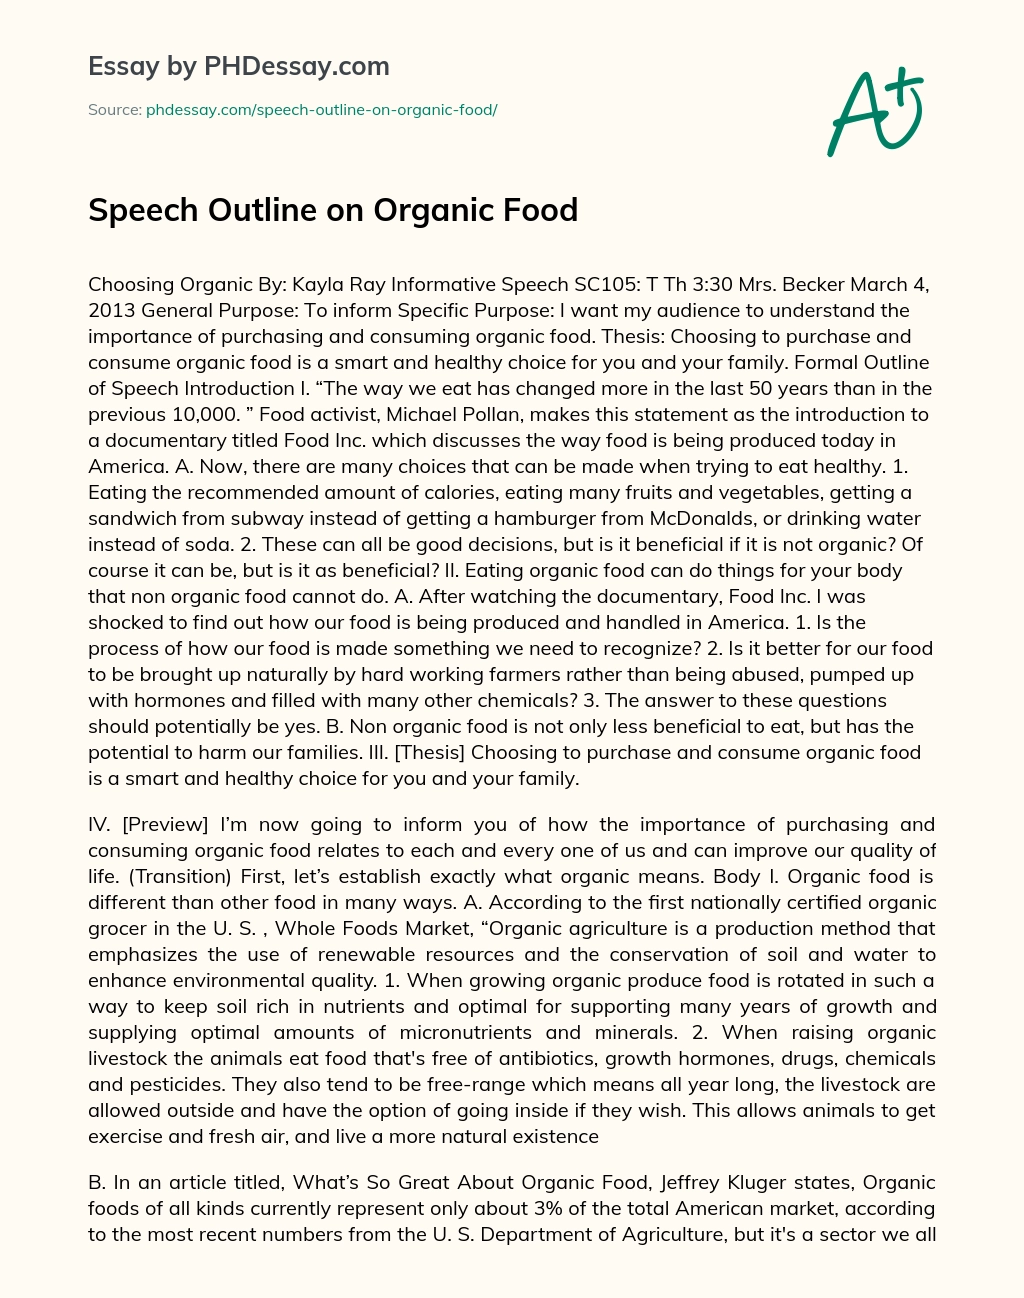 Speech Outline on Organic Food essay